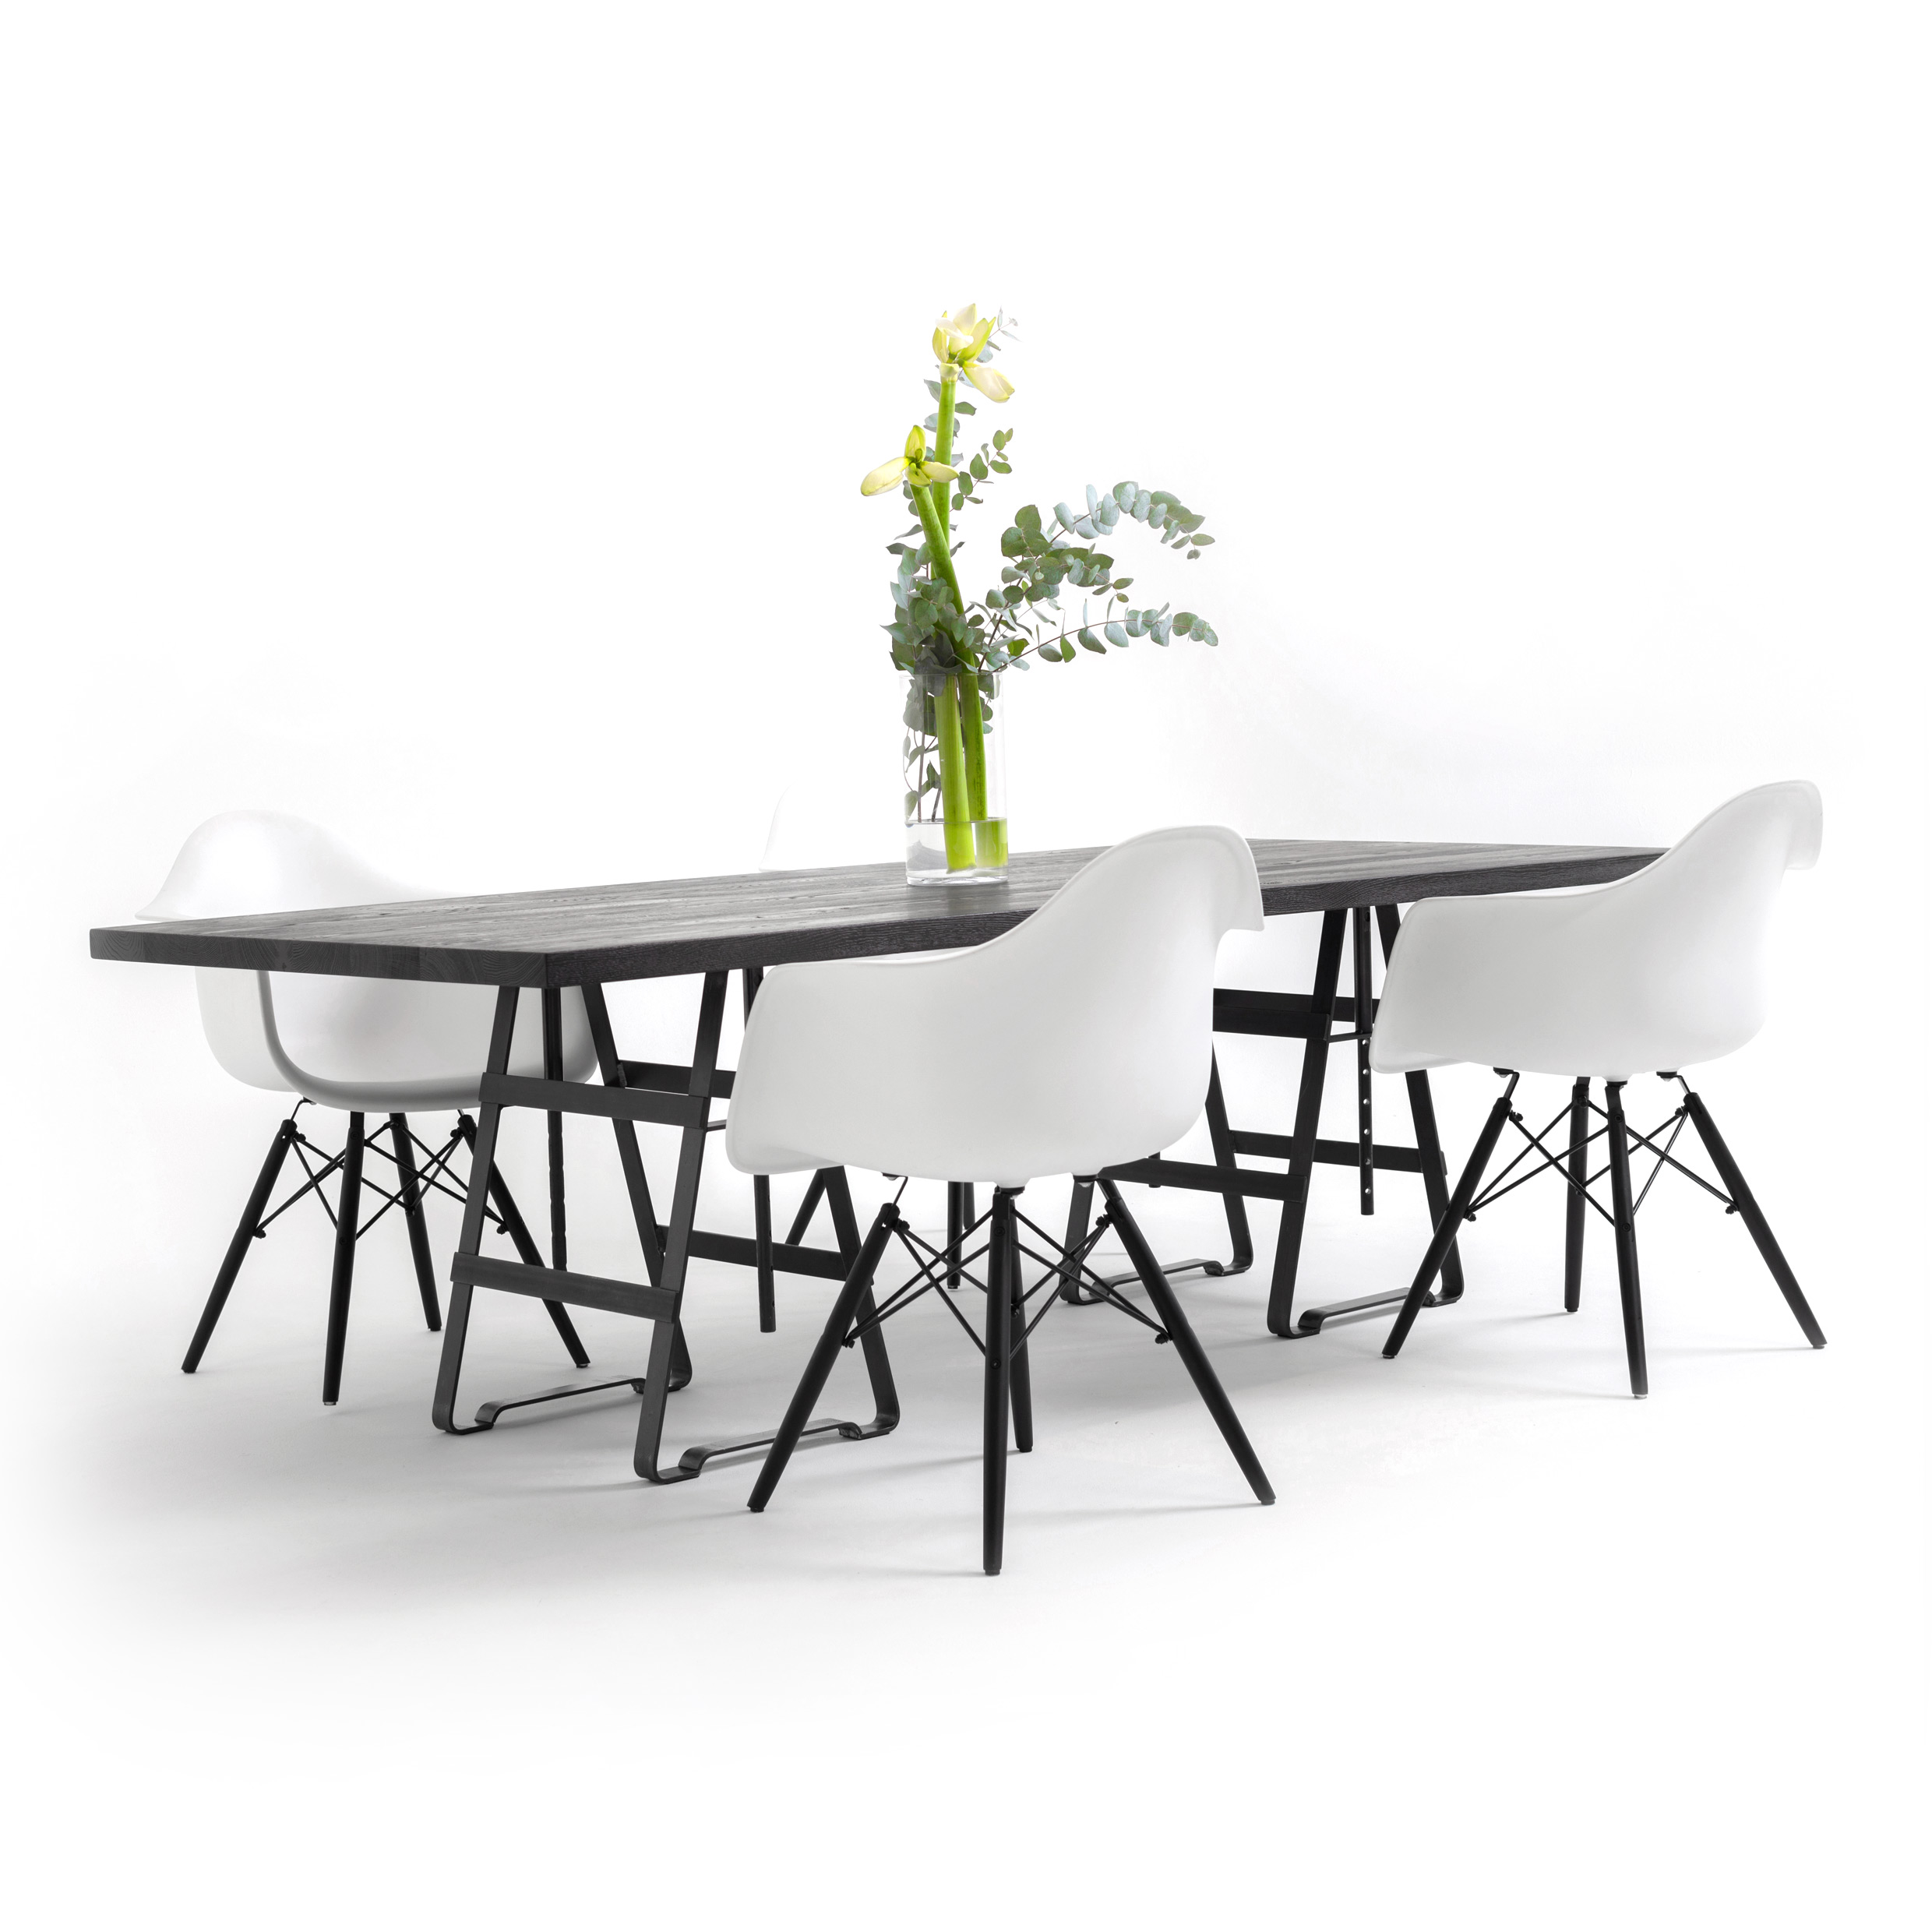 FORM EXCLUSIVE // FYNN - DINING TABLE | GERMAN OAK | BLACK CARED - 180CM X 90CM X 4CM - LACK MONKEY BLACK